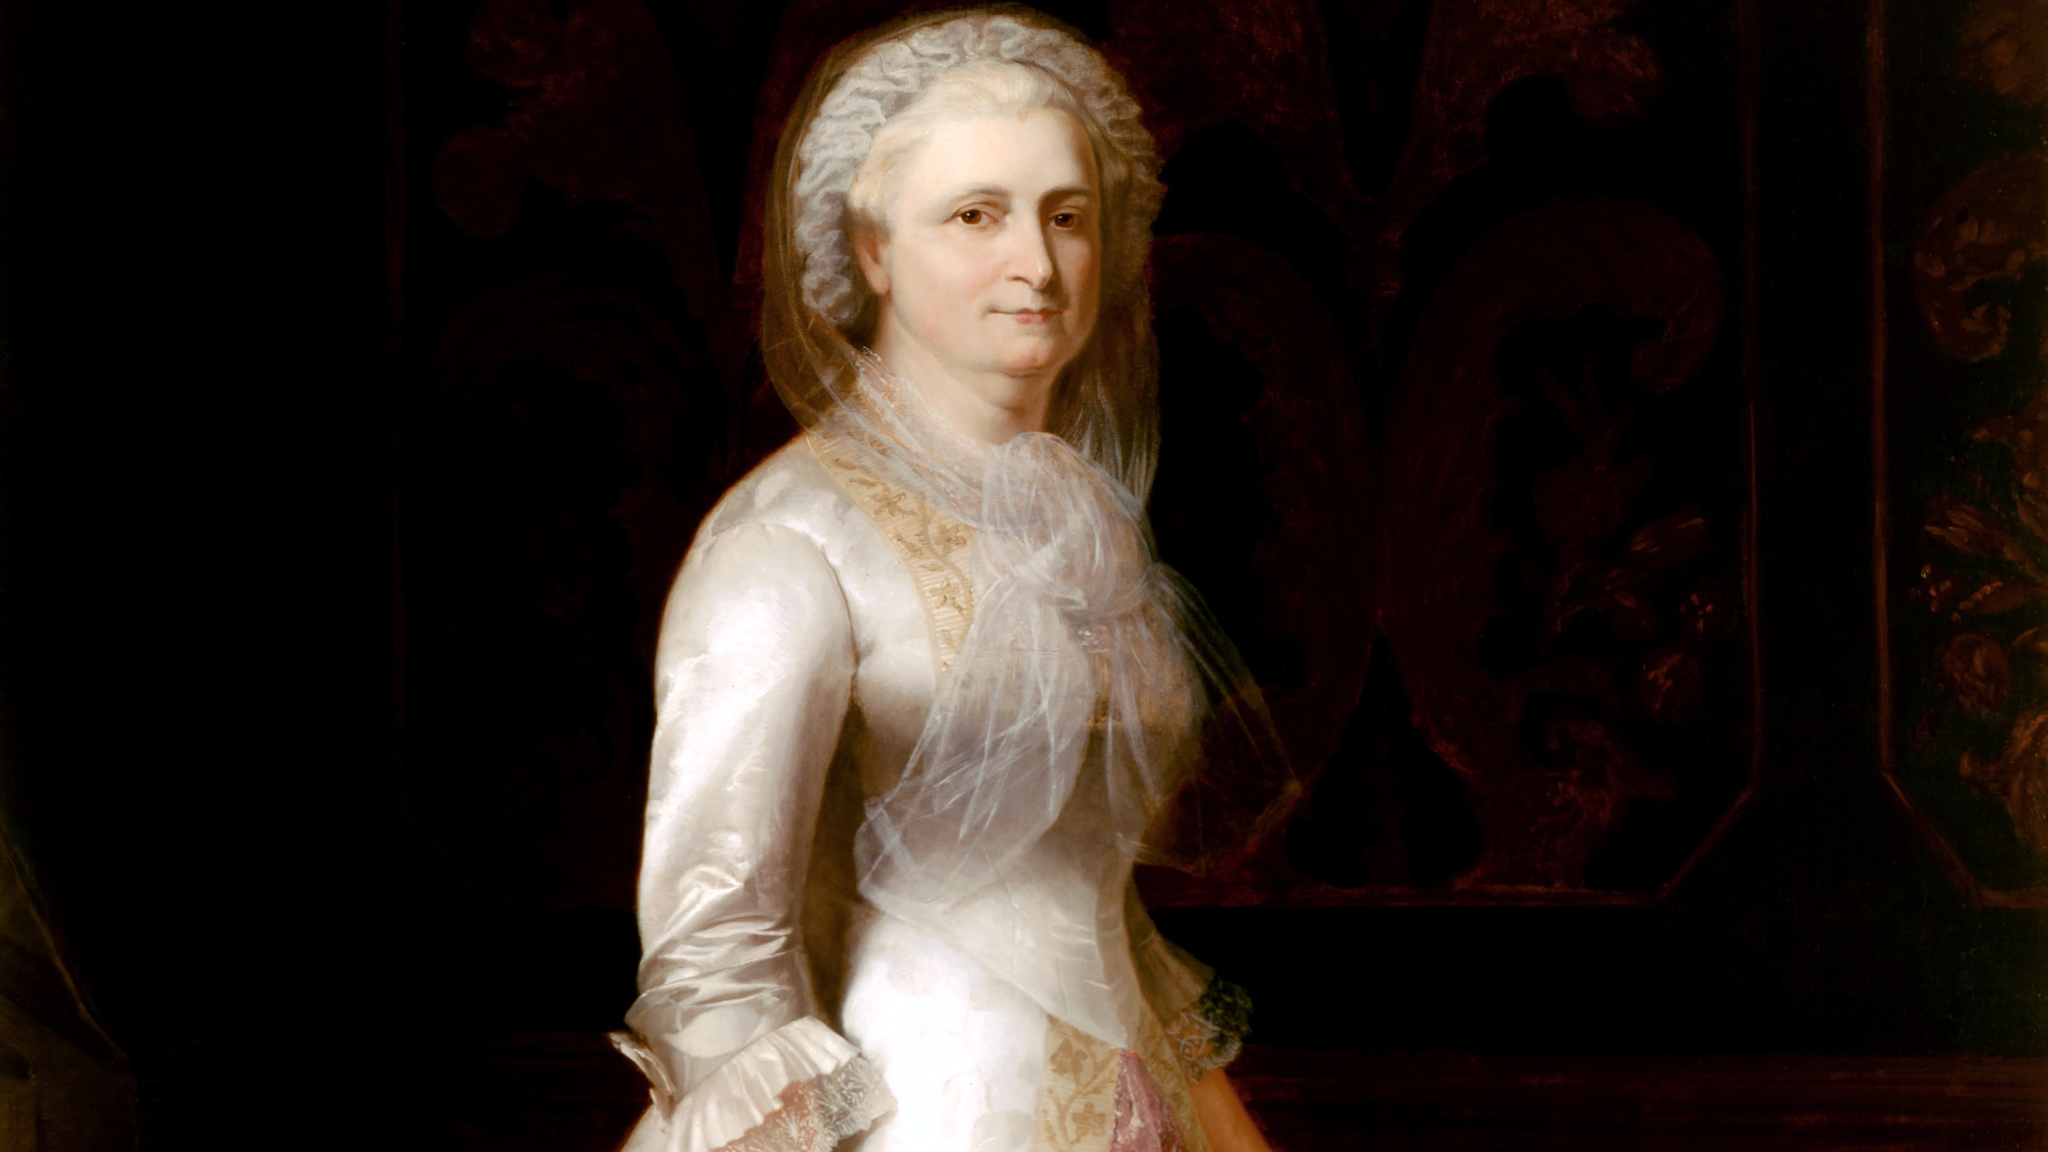 Read More: Martha Washington Was the Ultimate Military Spouse